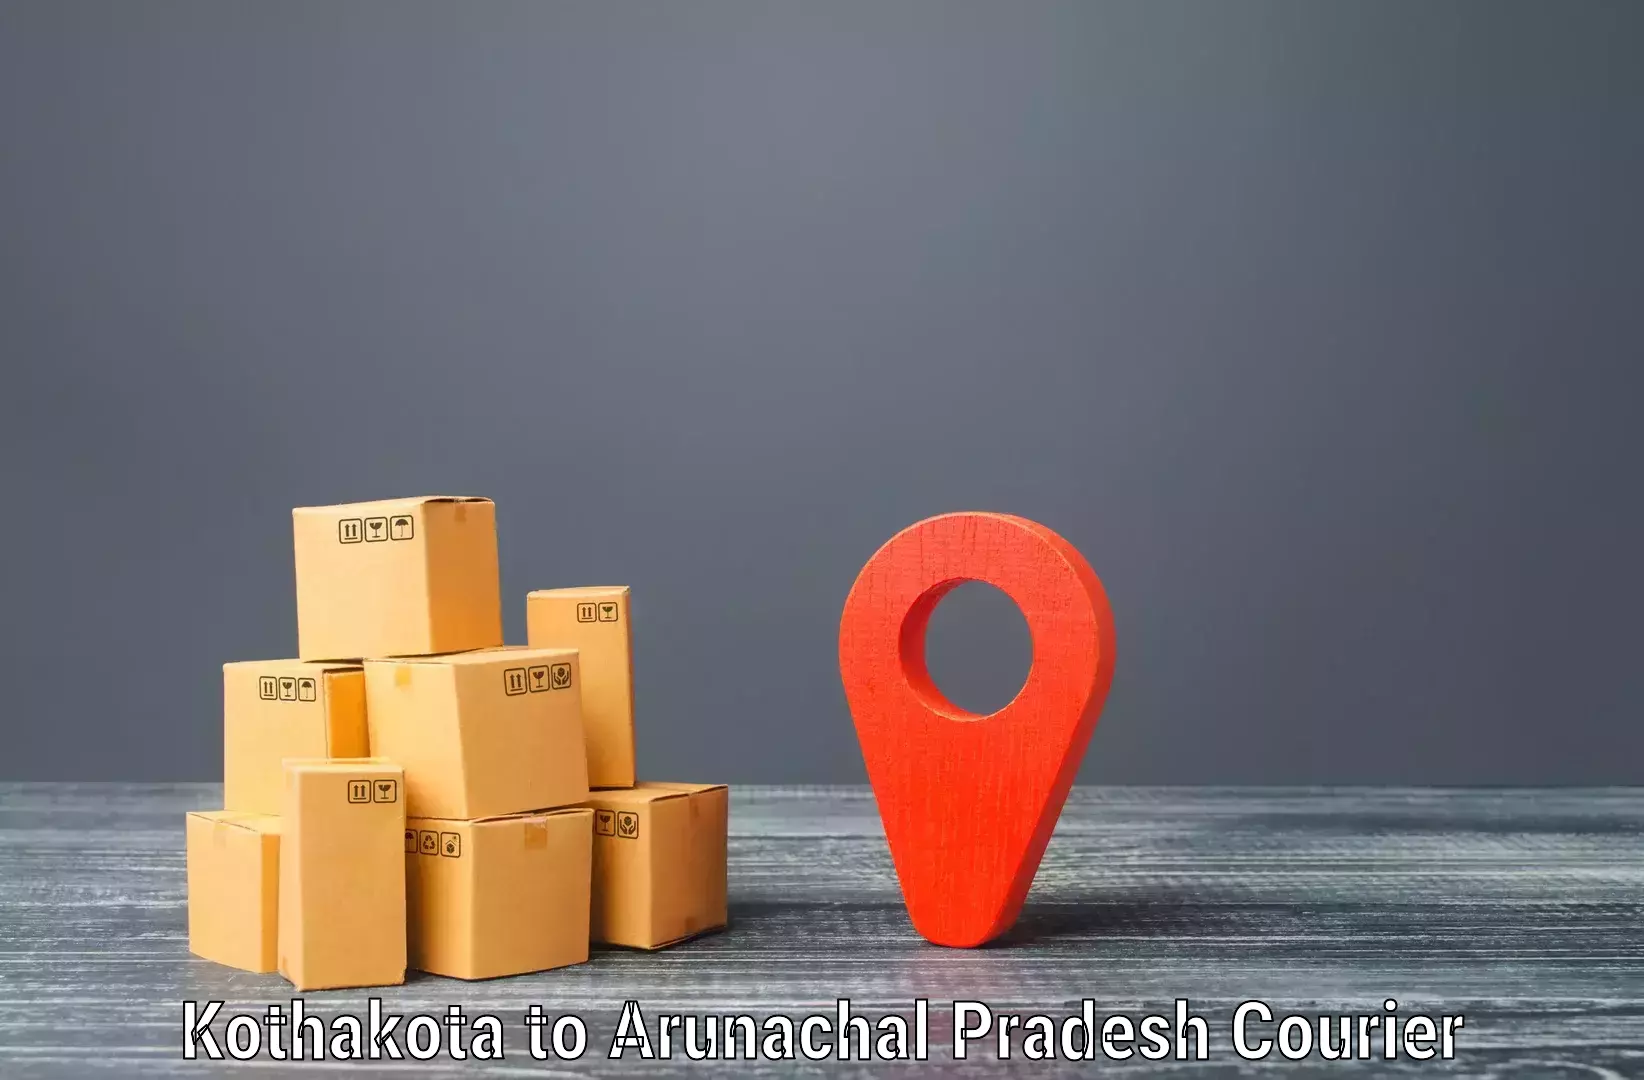 Global logistics network Kothakota to Upper Subansiri